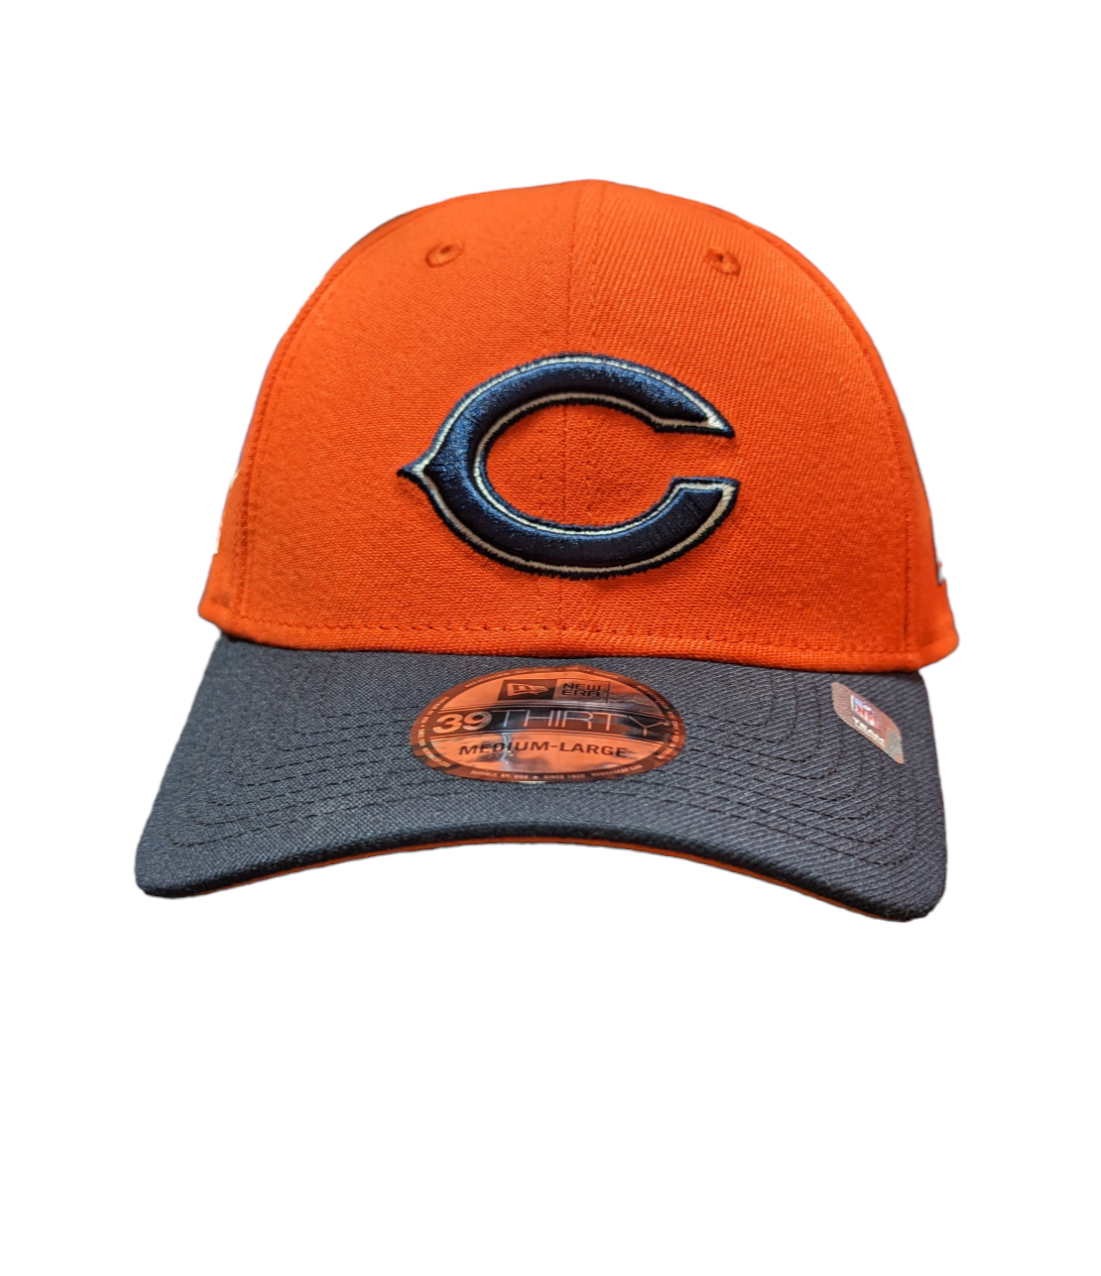 Men's Chicago Bears New Era 2 Tone Orange/Navy Alternate 39THIRTY Flex Hat